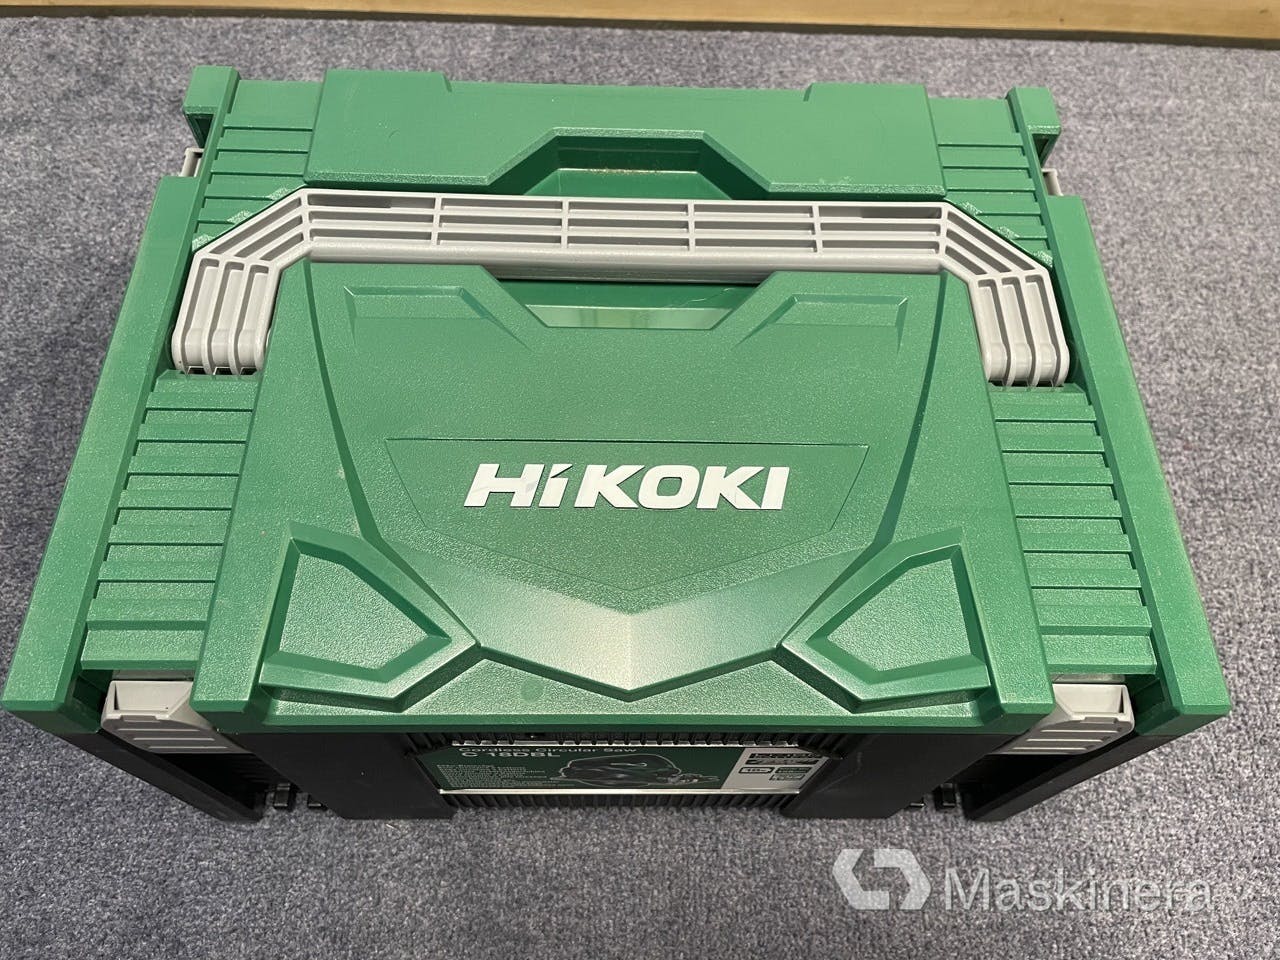 Hikoki battery powered 18V circular saw